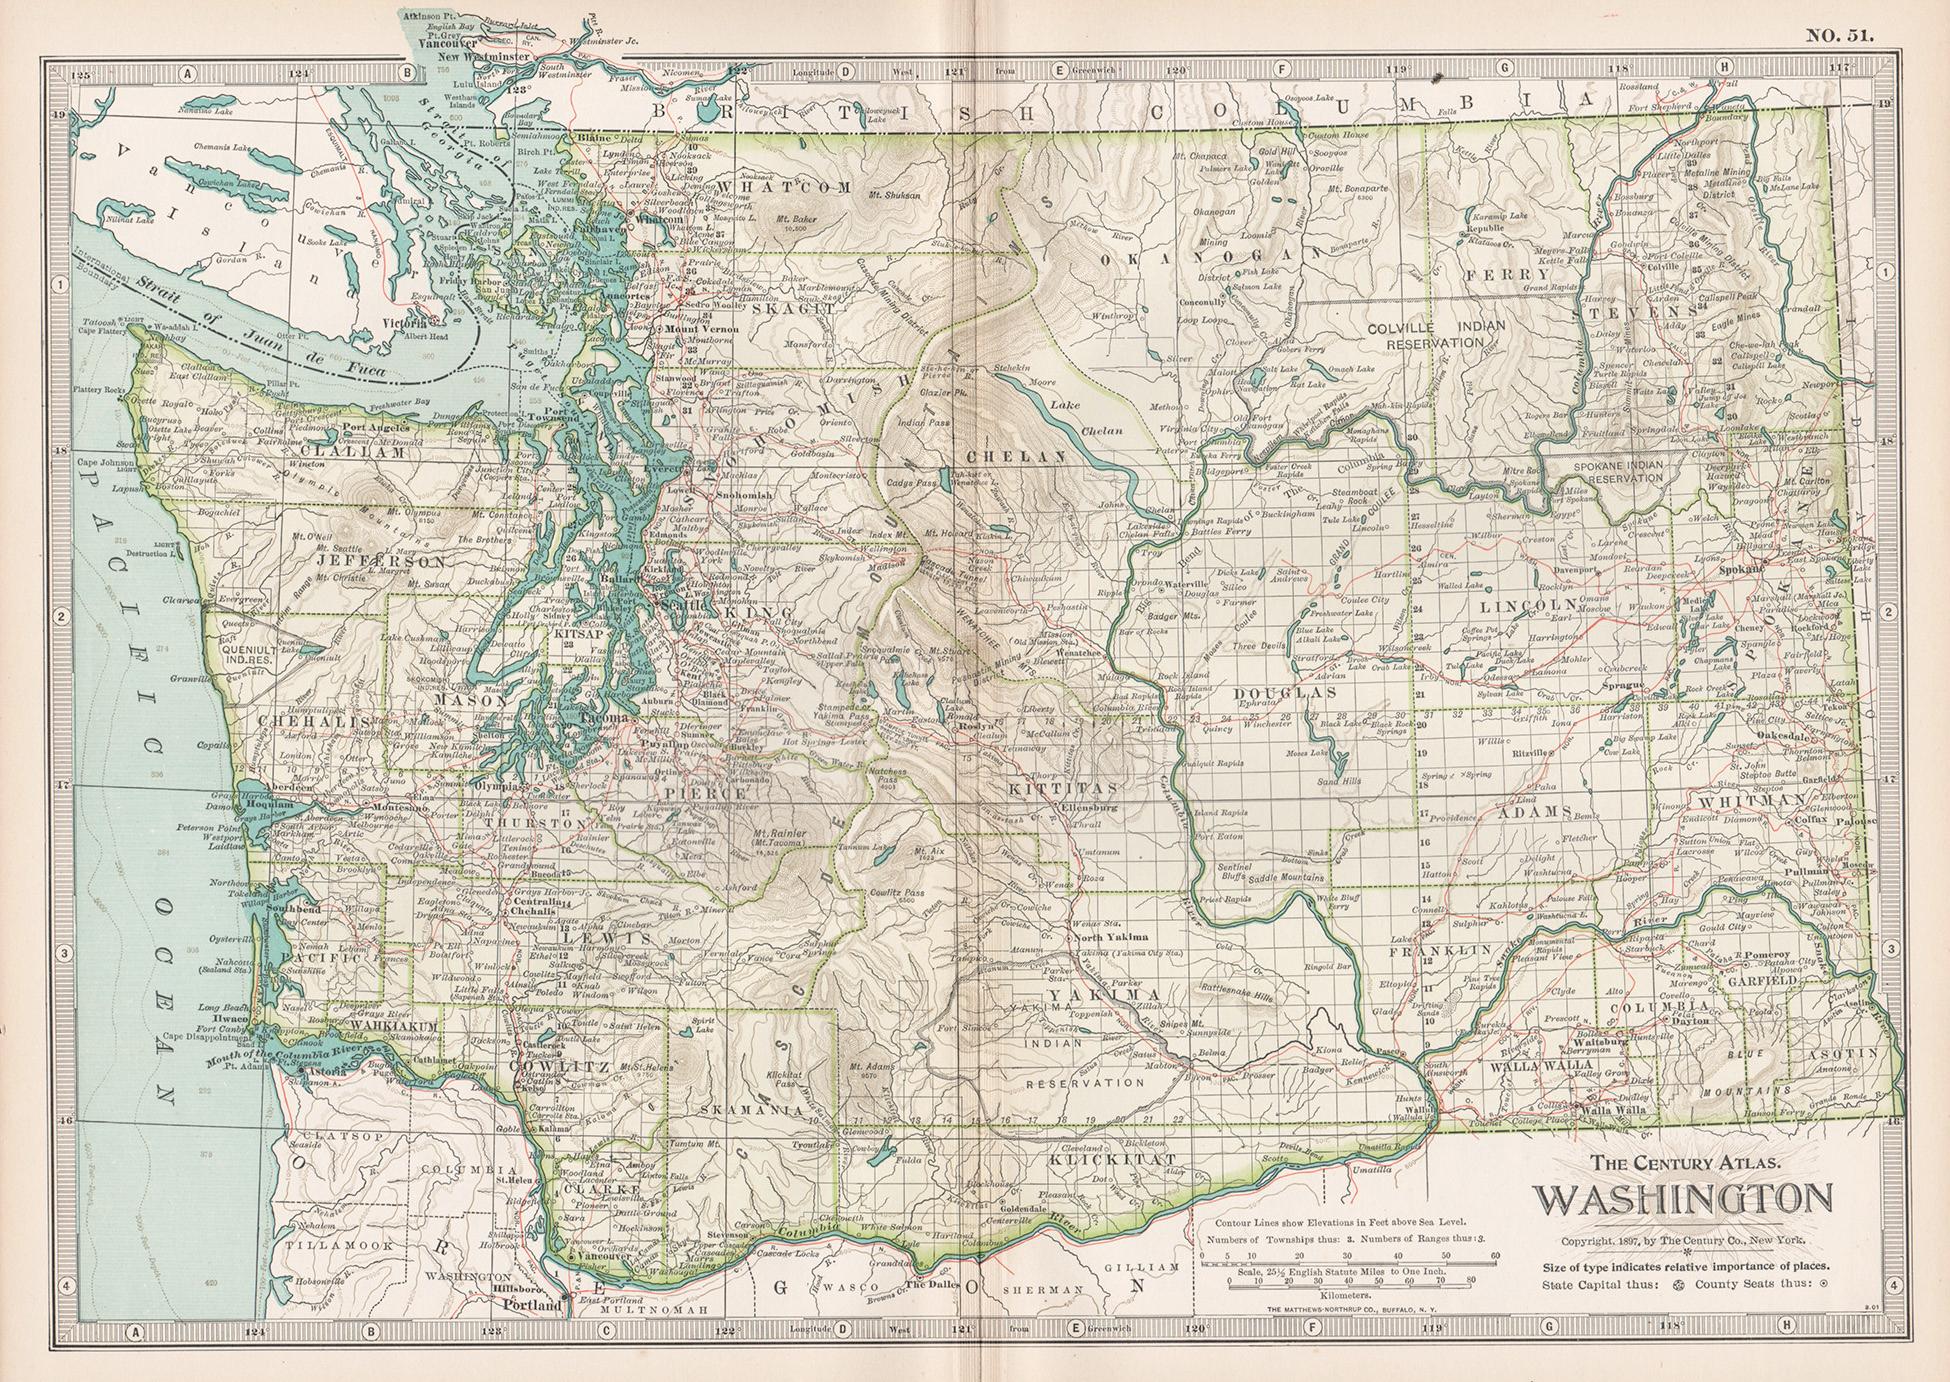 Unknown Print - Washington. USA. Century Atlas state antique vintage map